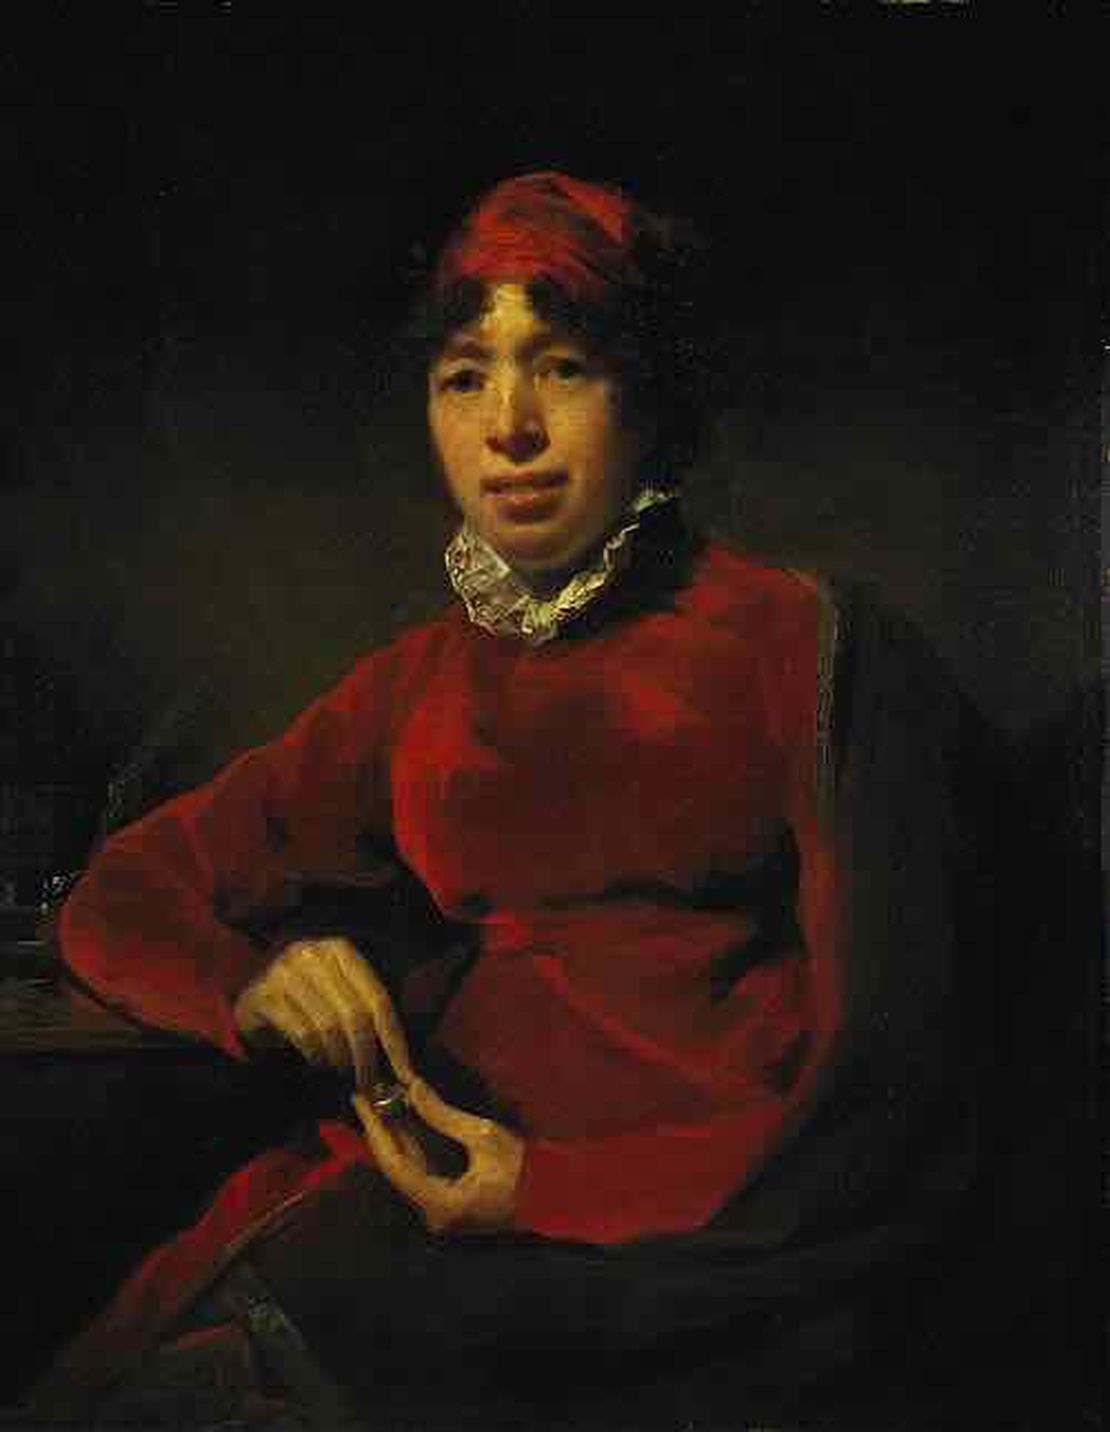 Elizabeth Hamilton, born